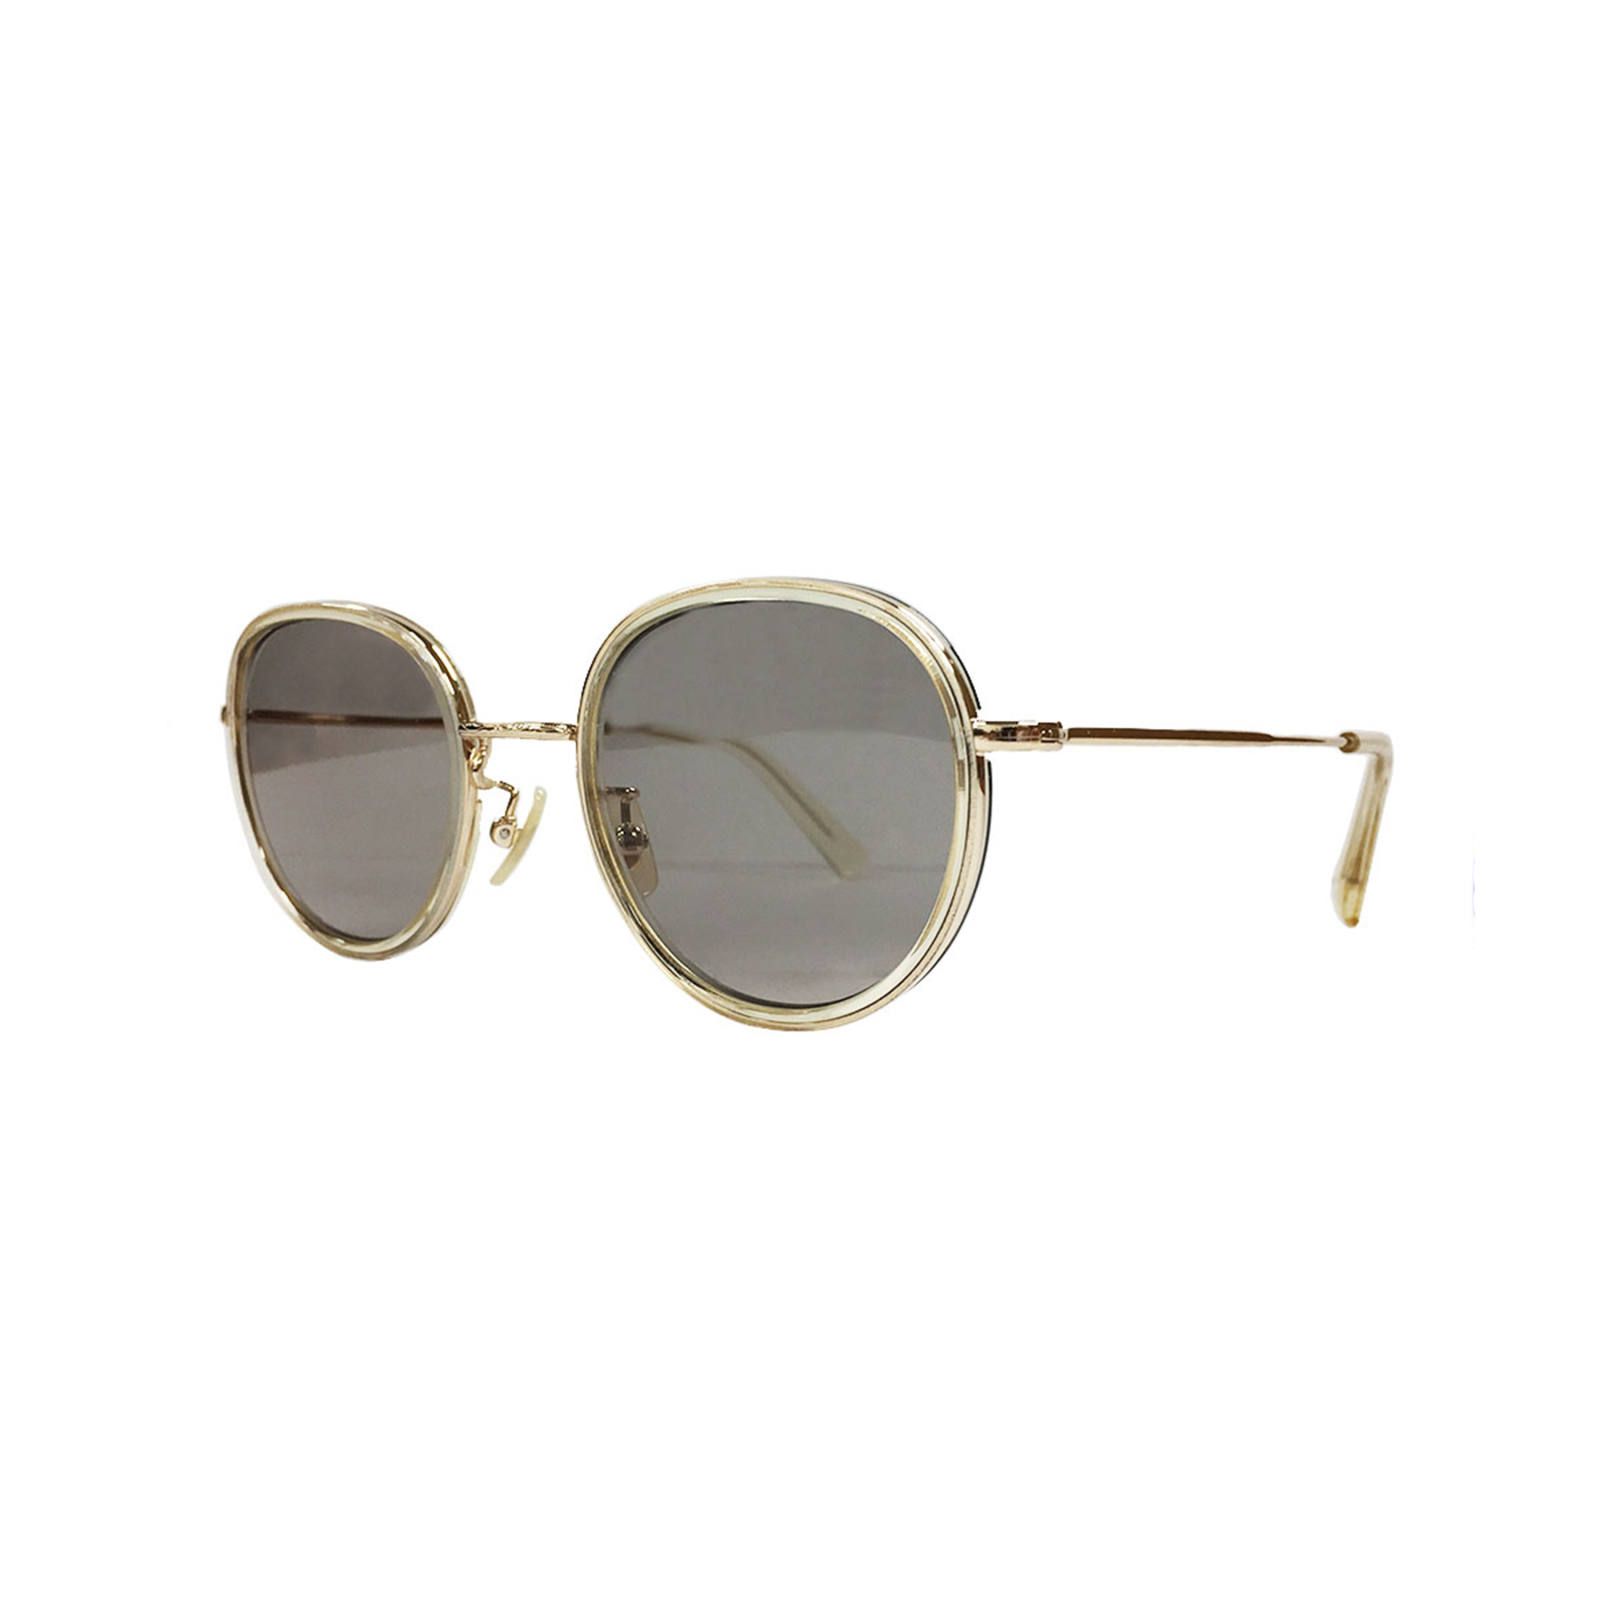 Martin/Gold/Light Yellow (Sunglasses) - 45□23 145 (Small)